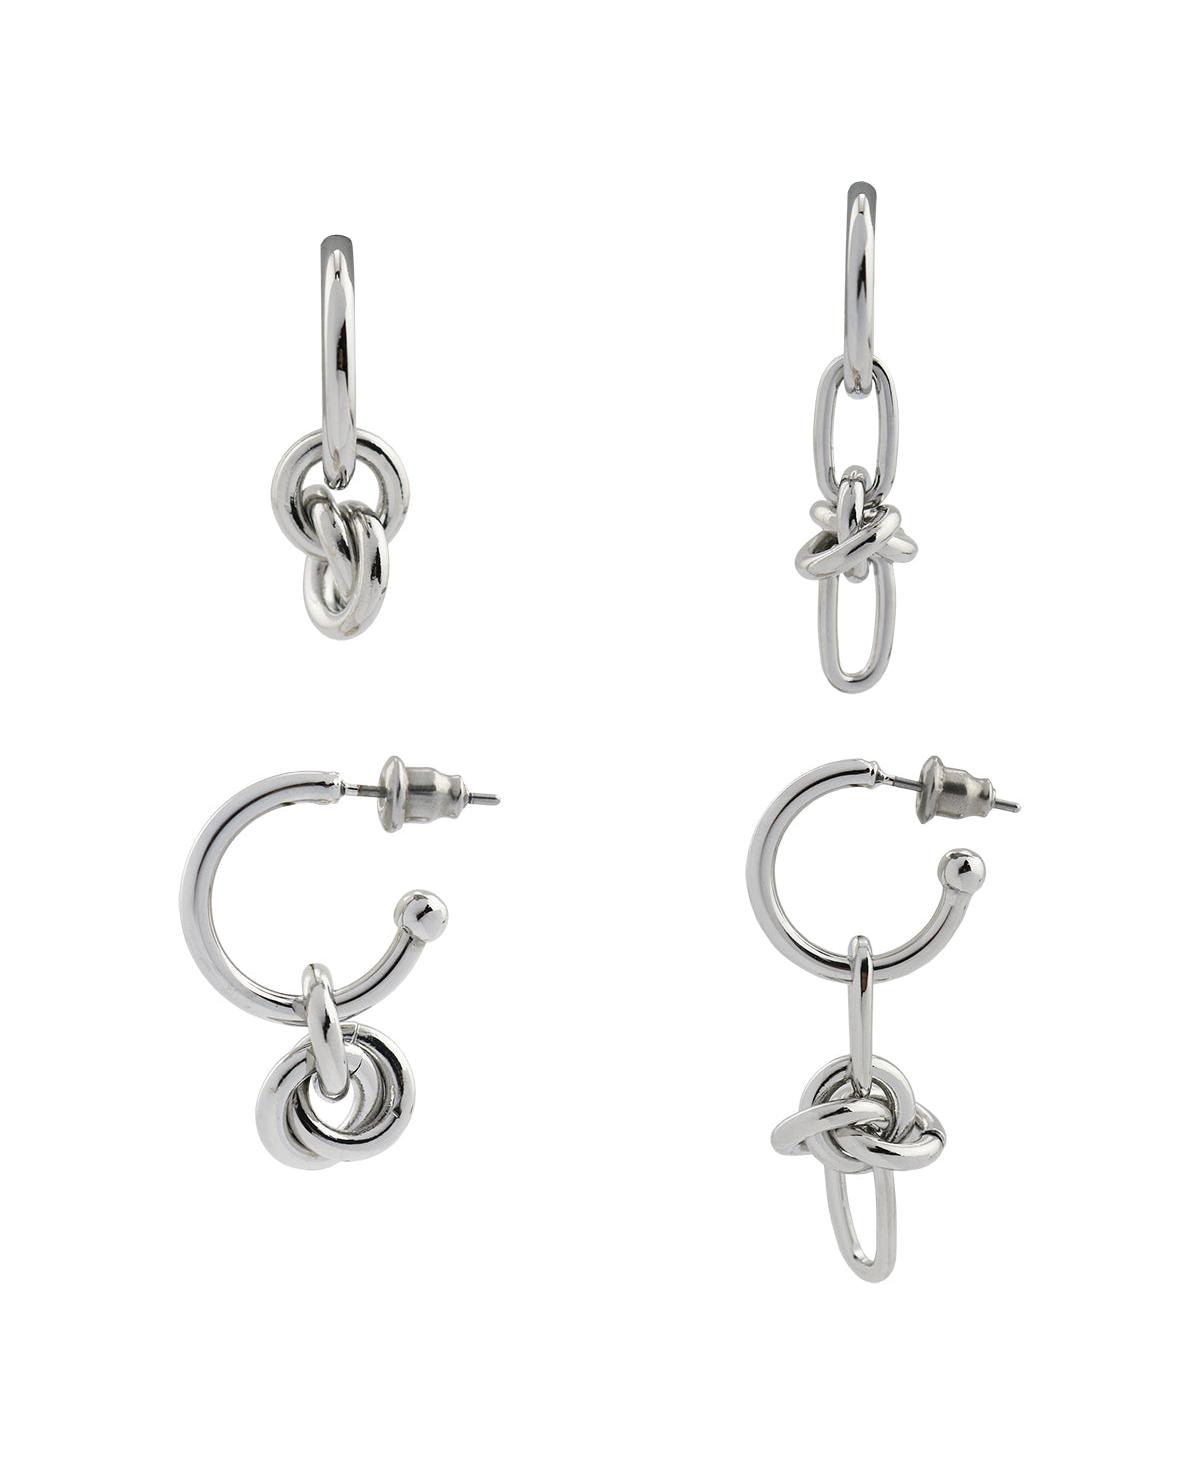 Indigo Chain Earrings - Silver